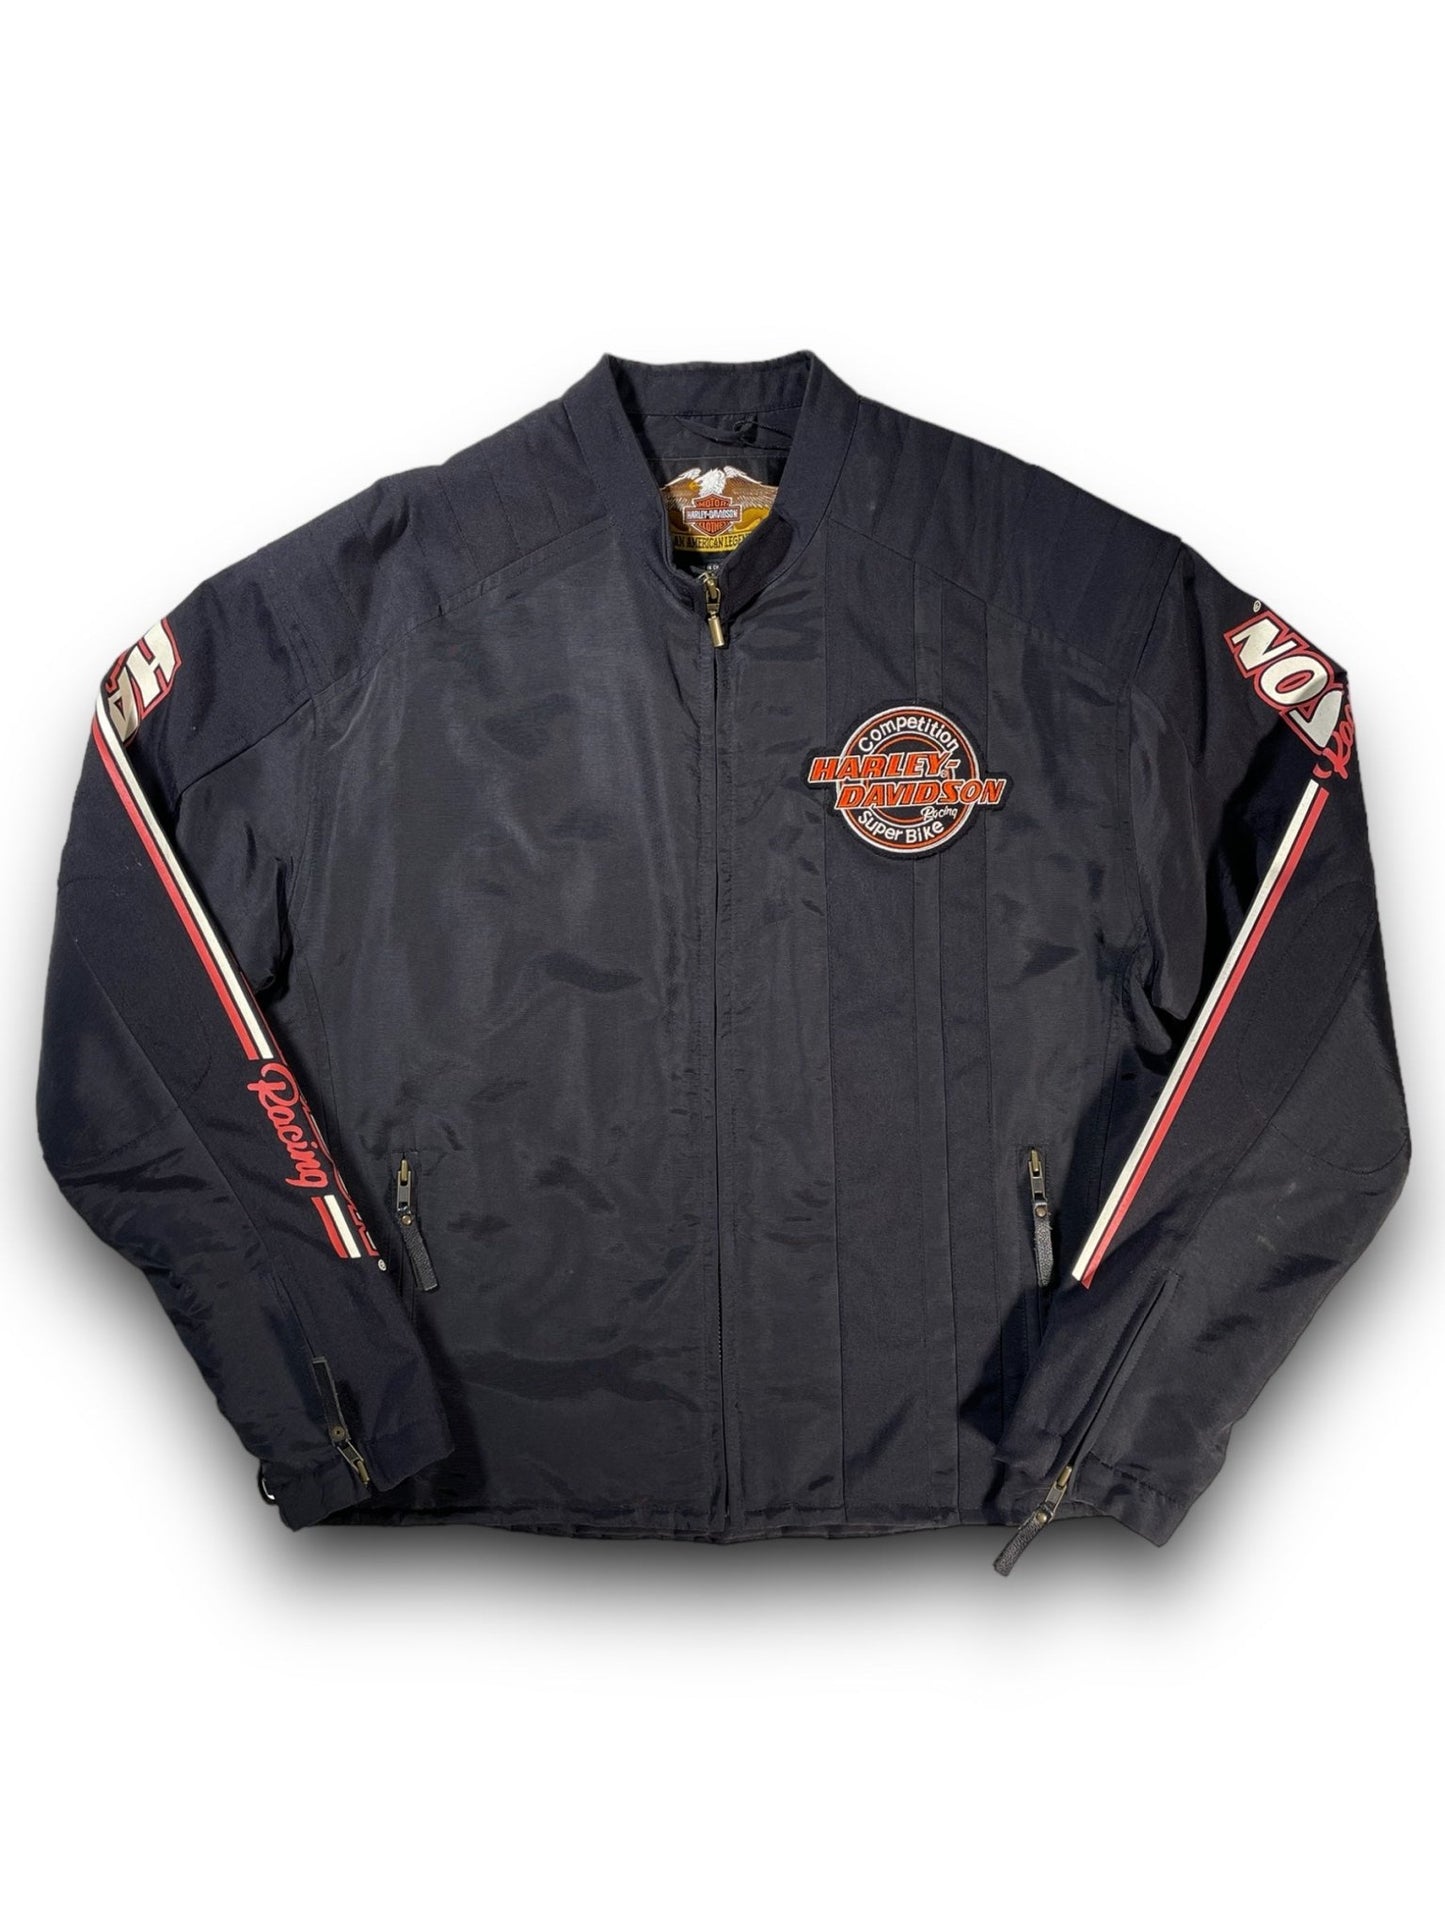 Harley Davidson Racing Jacket - scenariovintagestore